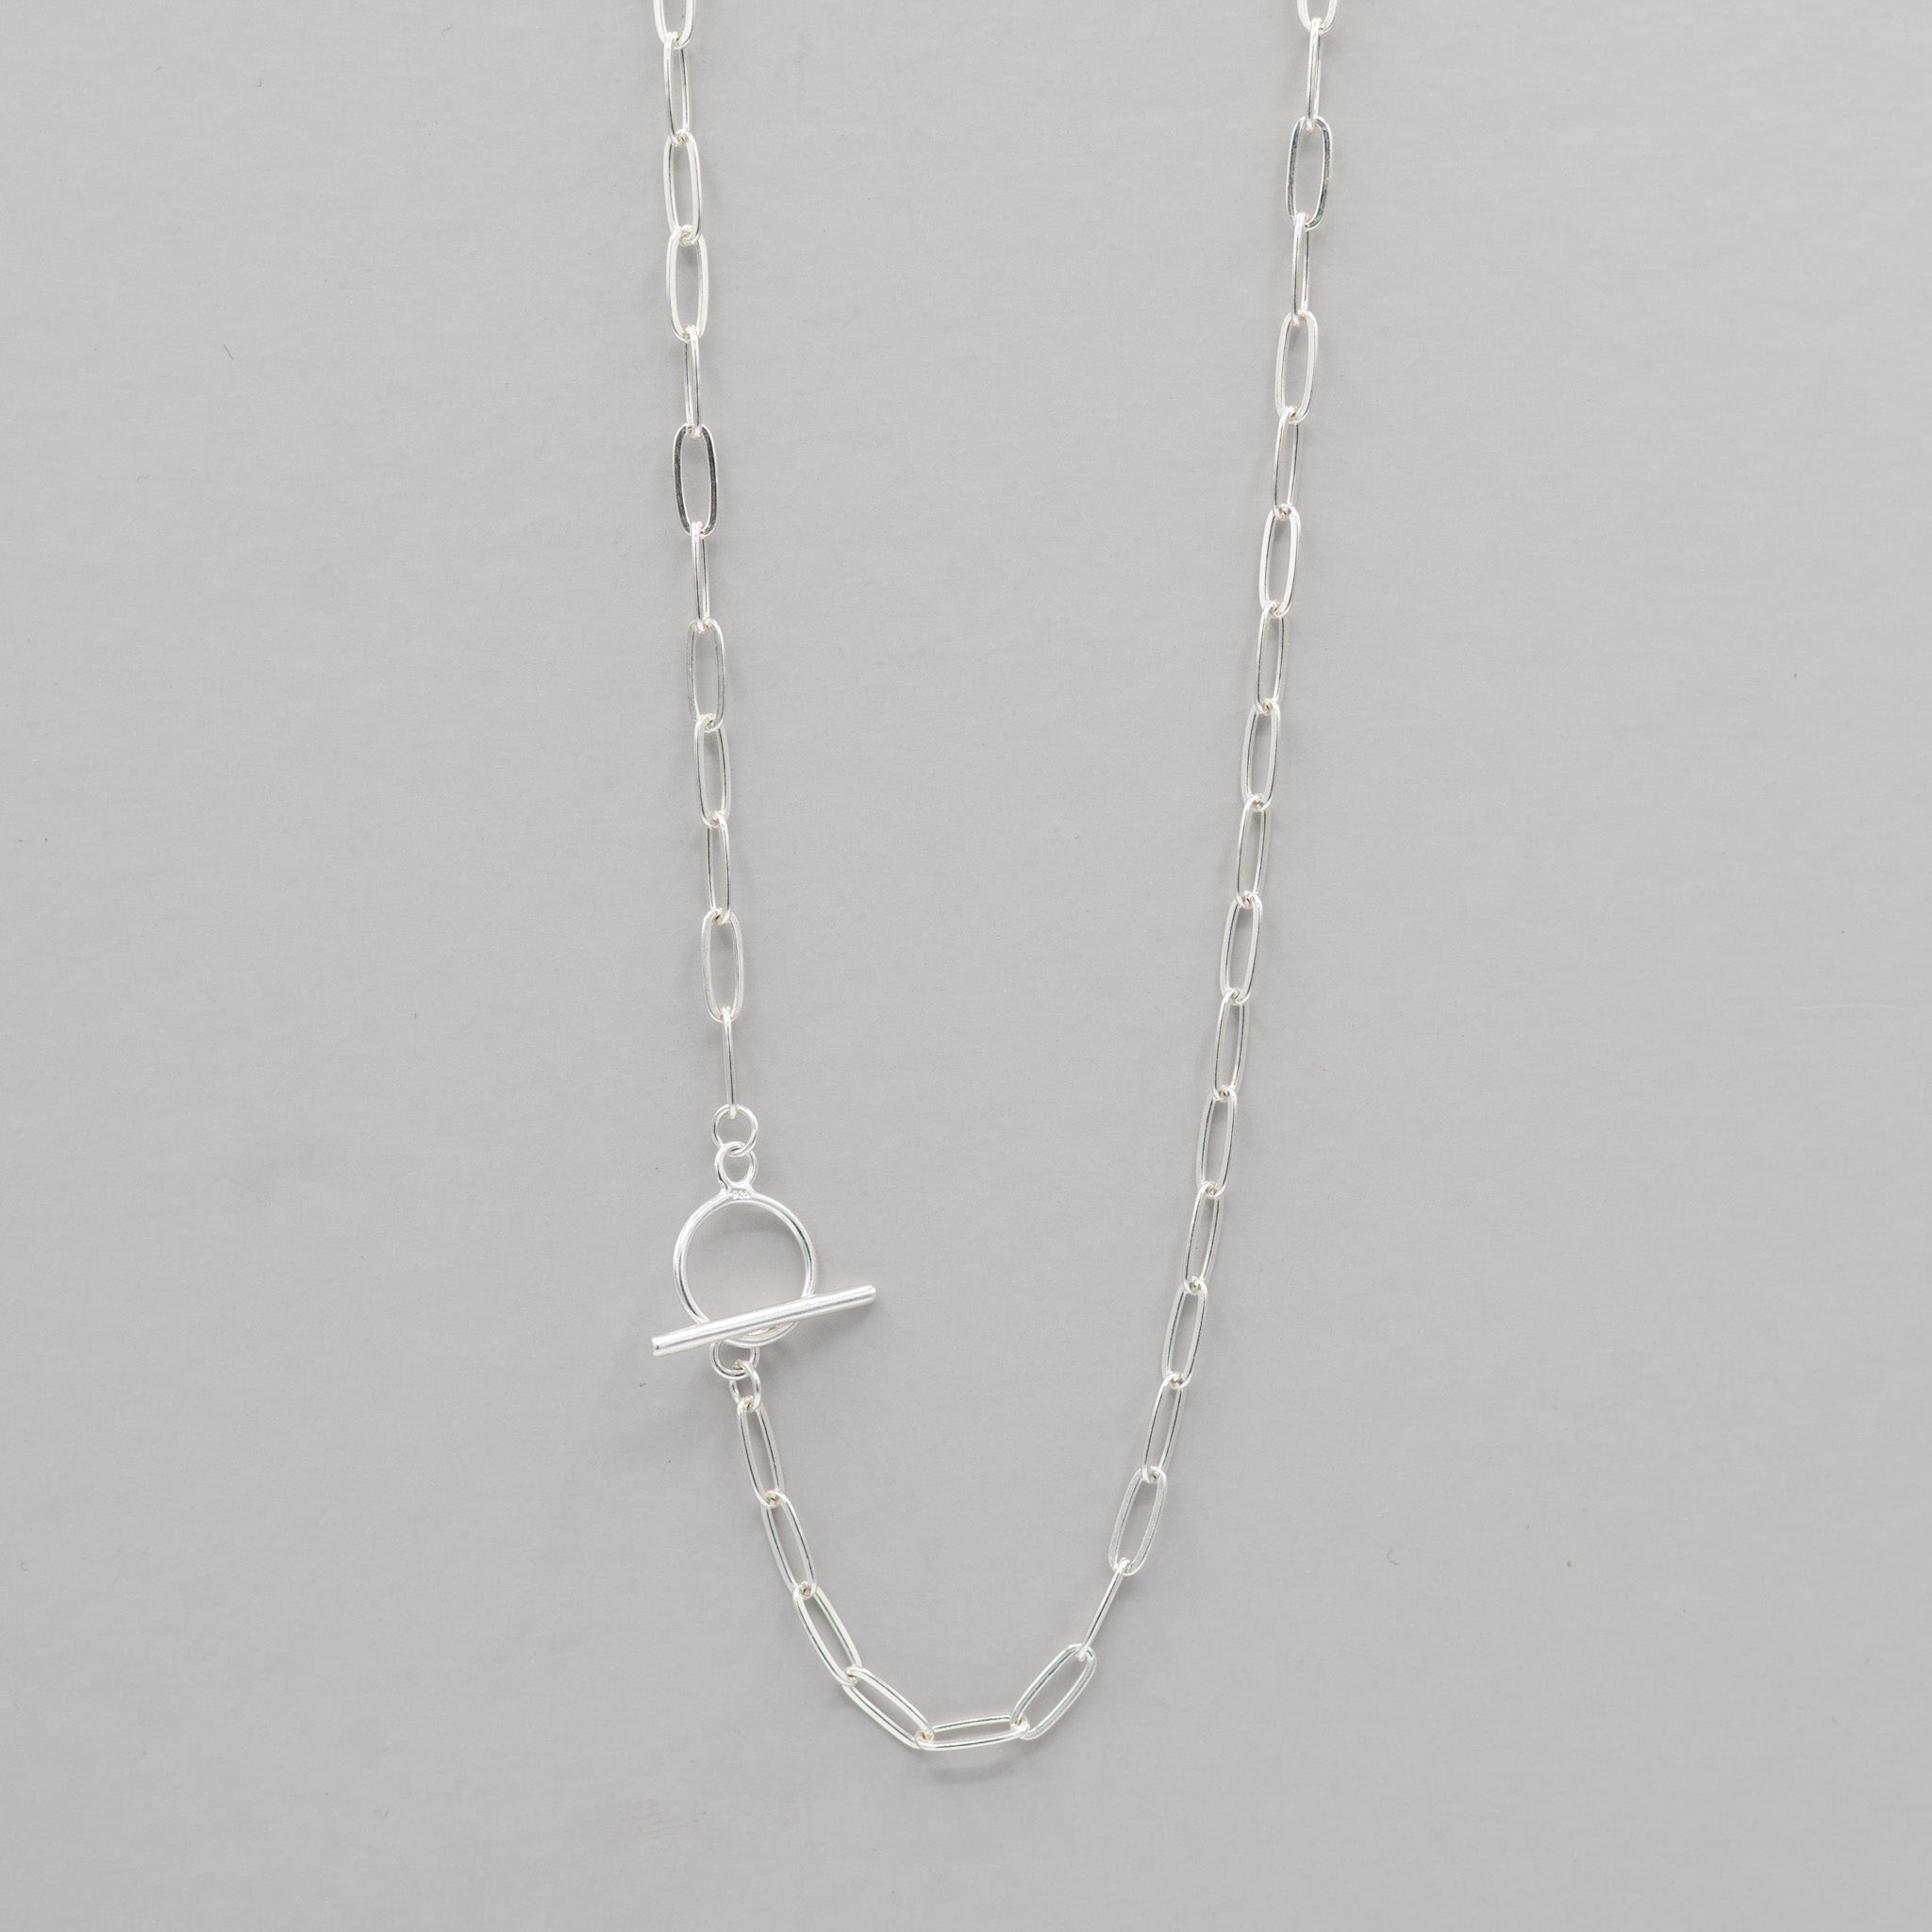 Sterling Silver Medium Paper Clip Toggle Necklace & Charm Set - Jewel Ya